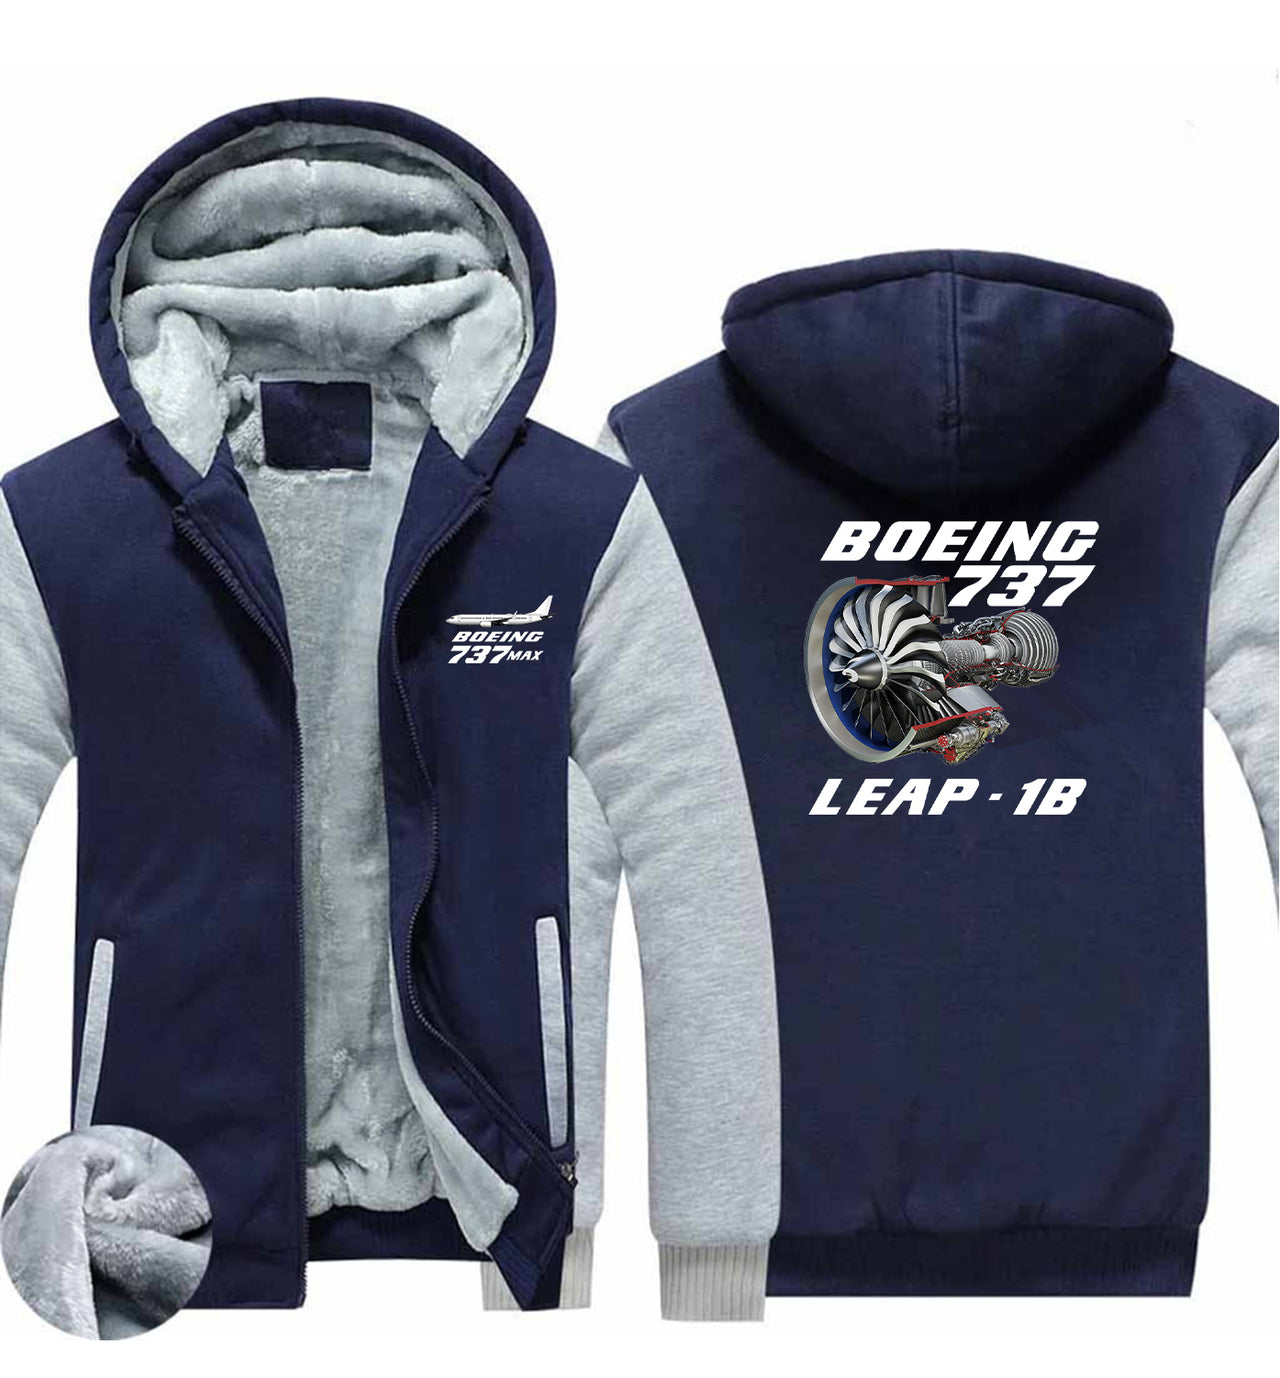 Boeing 737 & Leap 1B Designed Zipped Sweatshirts